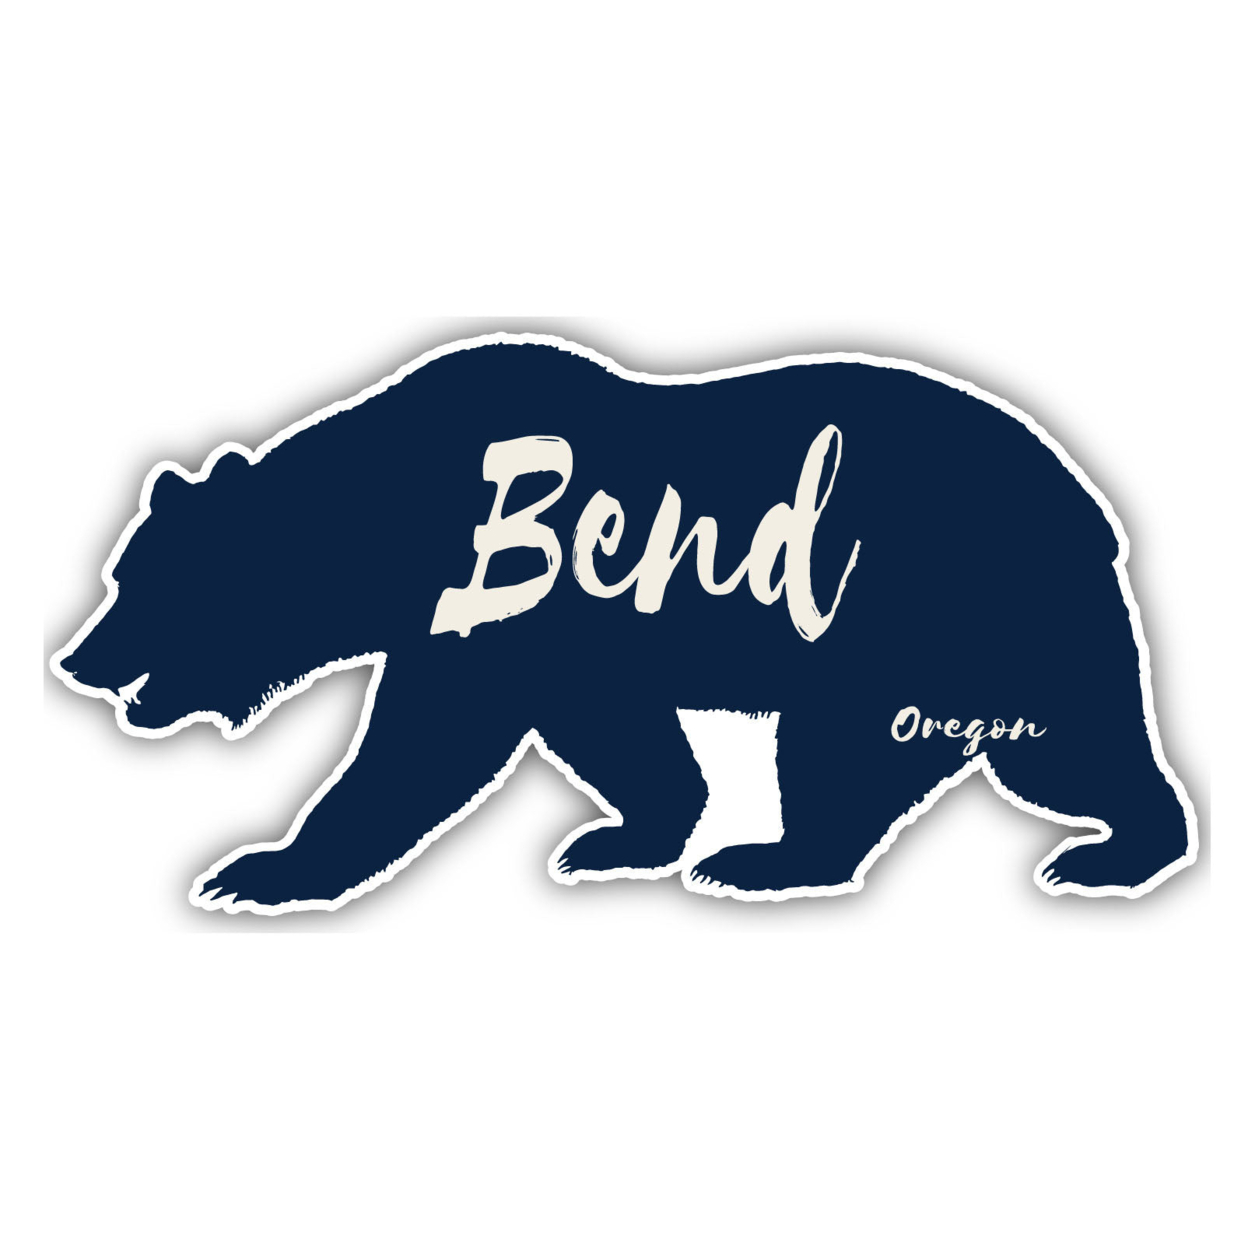 Bend Oregon Souvenir Decorative Stickers (Choose Theme And Size) - 4-Pack, 8-Inch, Bear